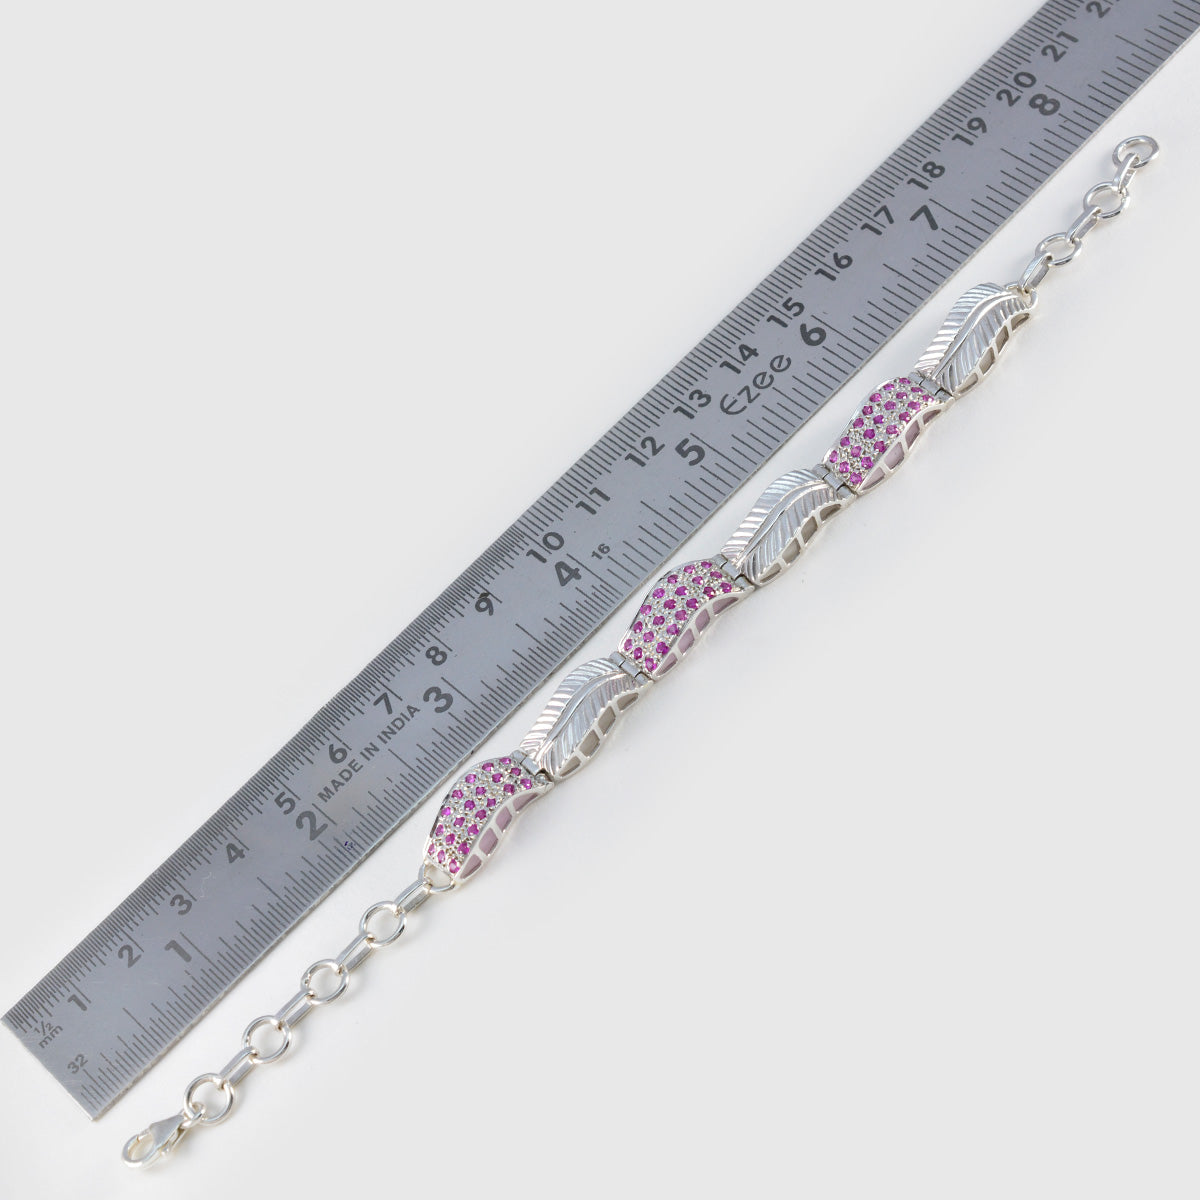 Riyo Beautiful 925 Sterling Silver Bracelet For Womens Ruby CZ Bracelet Bezel Setting Bracelet Link Charm Bracelet L Size 6-8.5 Inch.